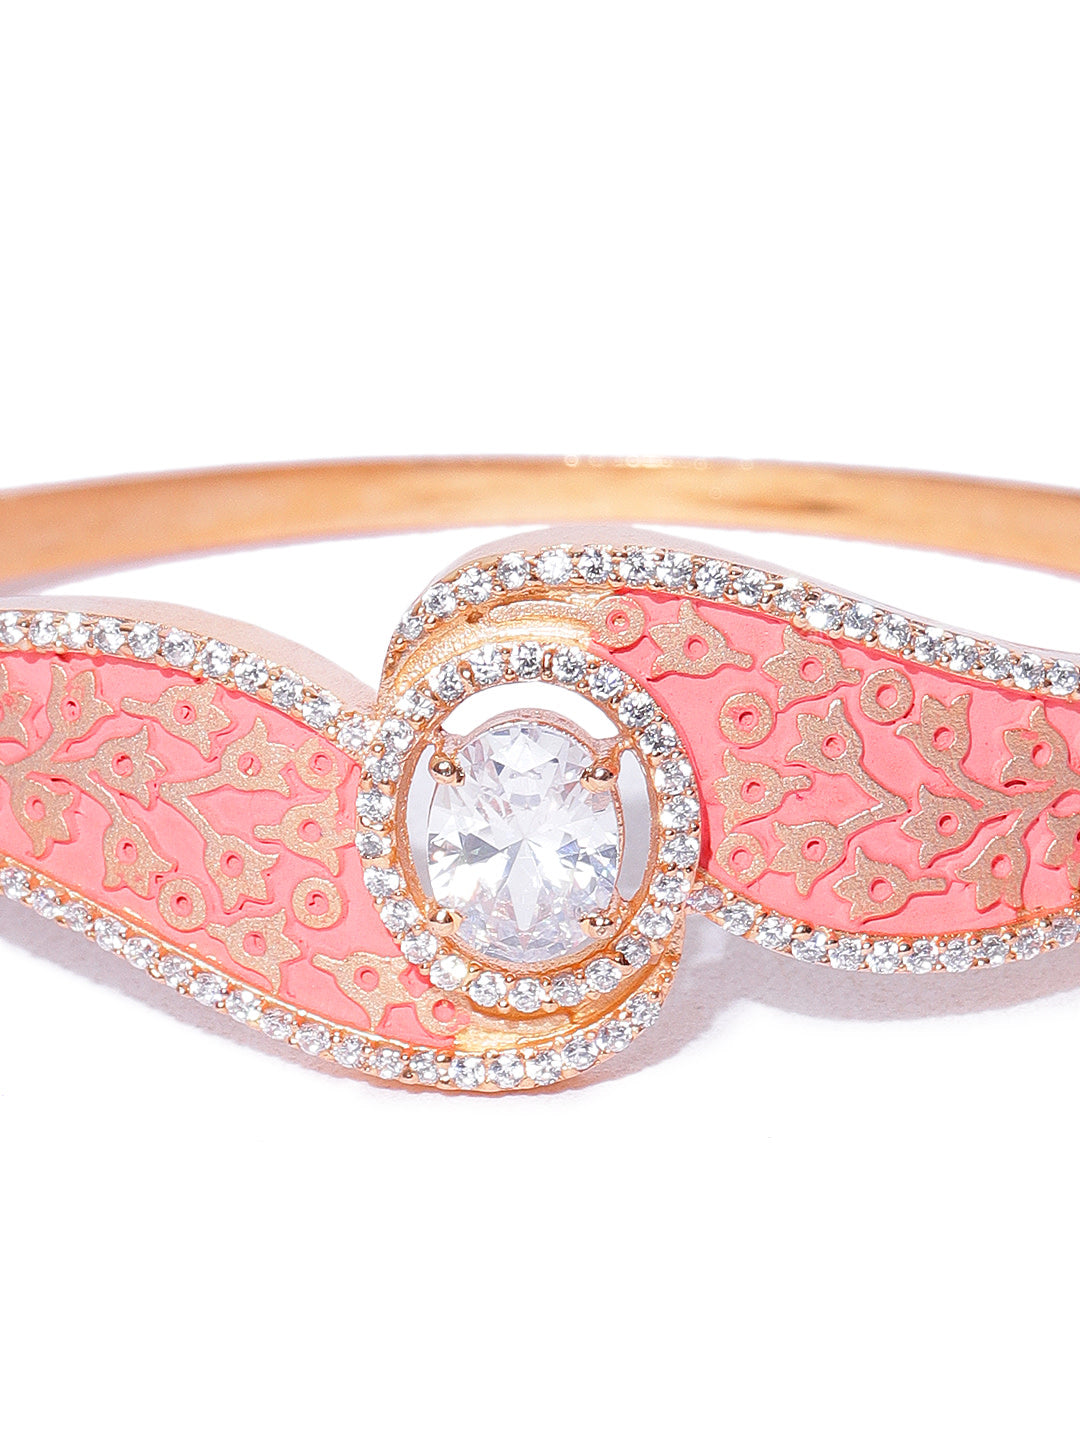 Gold-Plated American Diamond Studded, Meenakari Bracelet in Peach Color